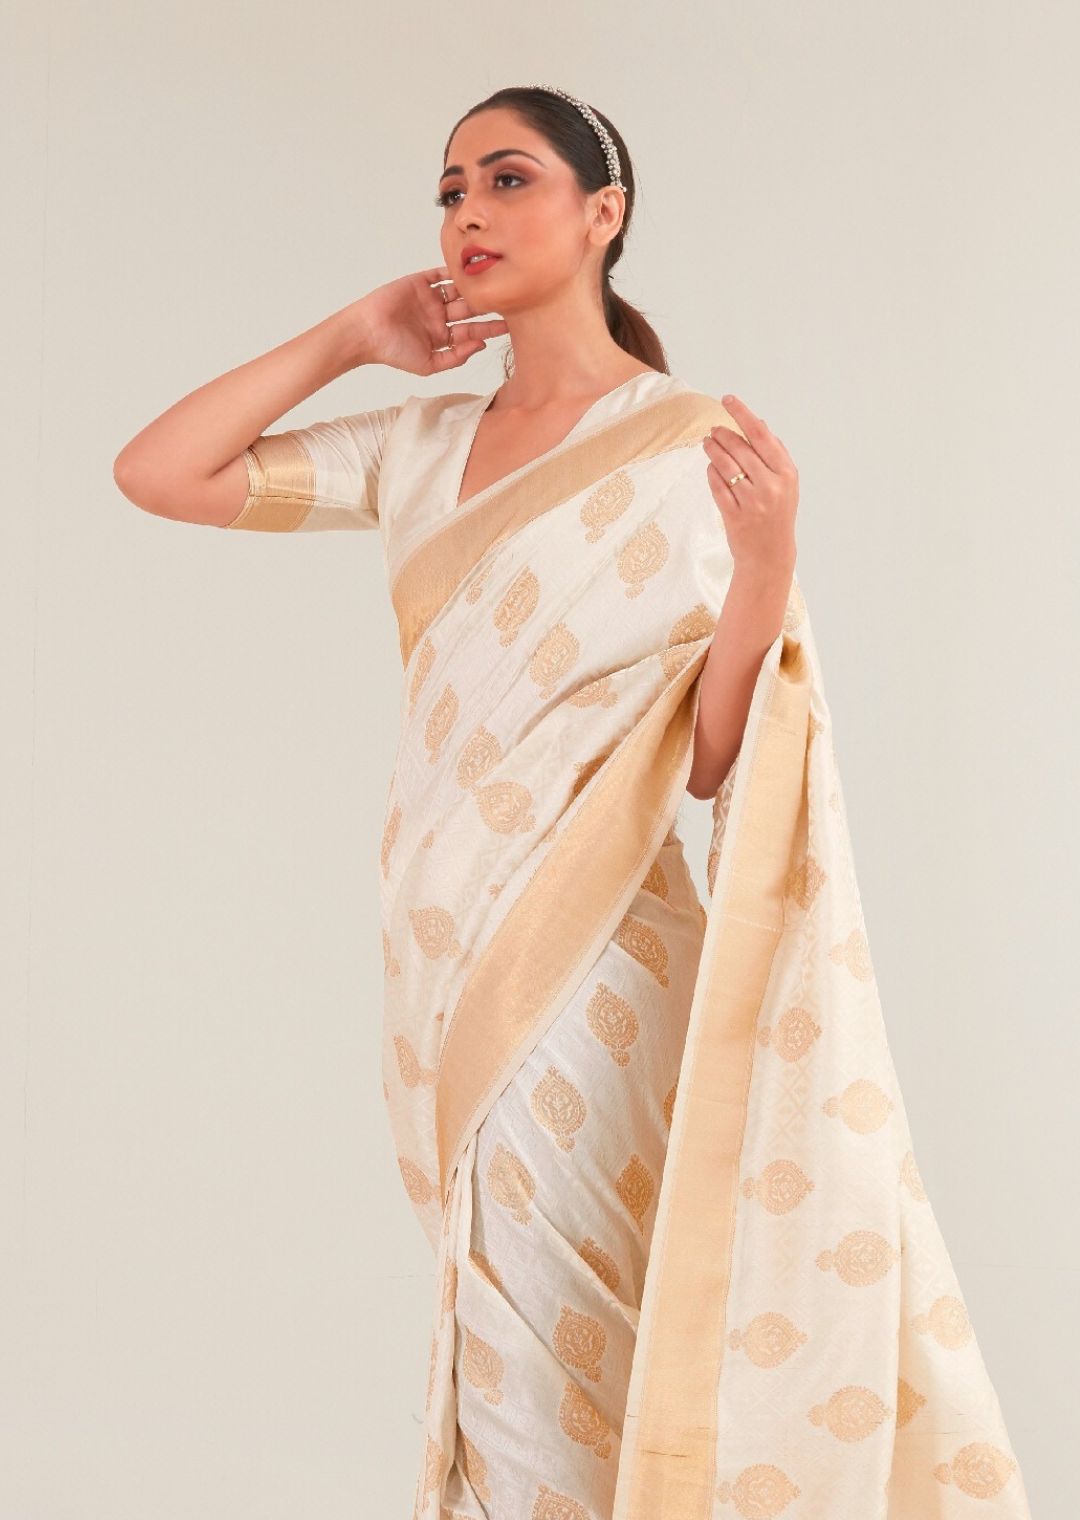 Banarasi Pure Silk Saree in Off White : SNEA1916